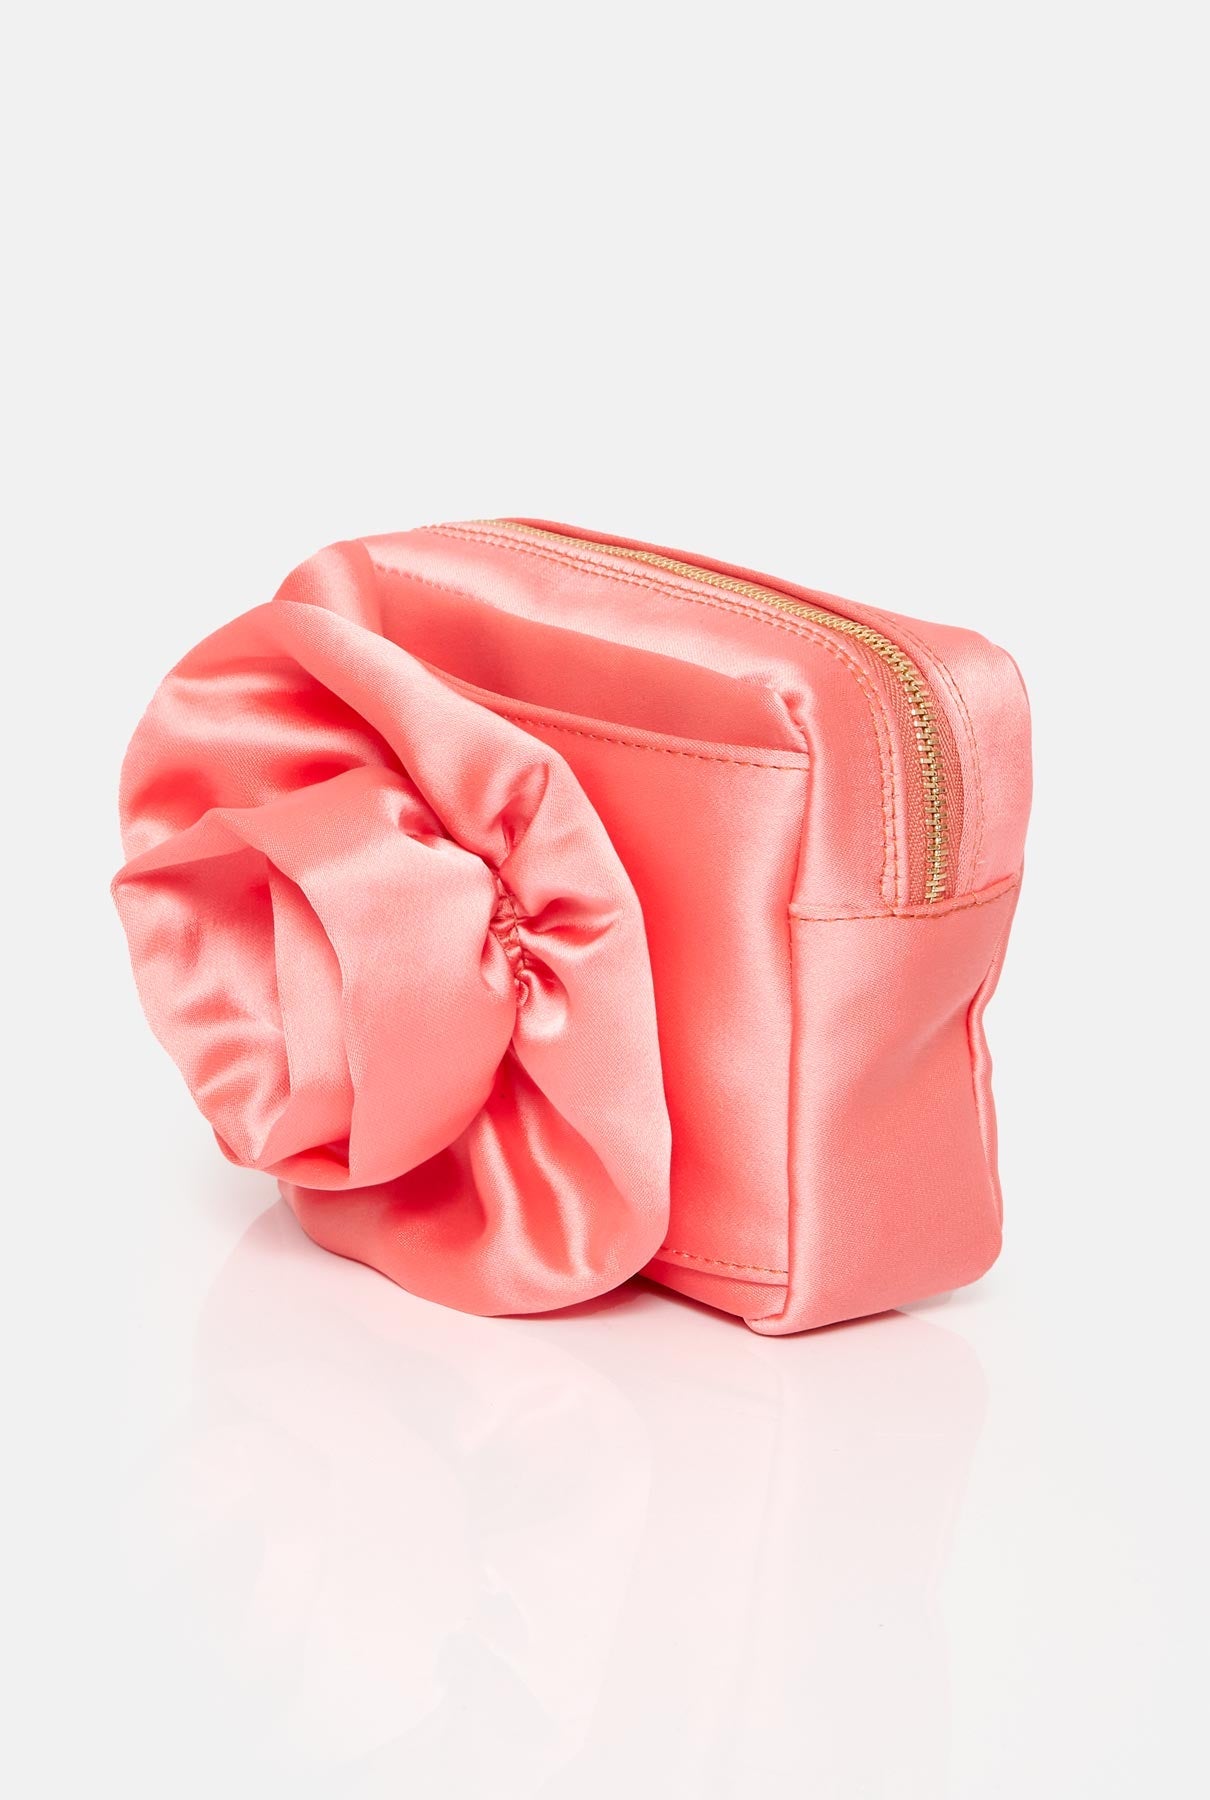 Pulseta bag Coral Hand bags Celina Martin 